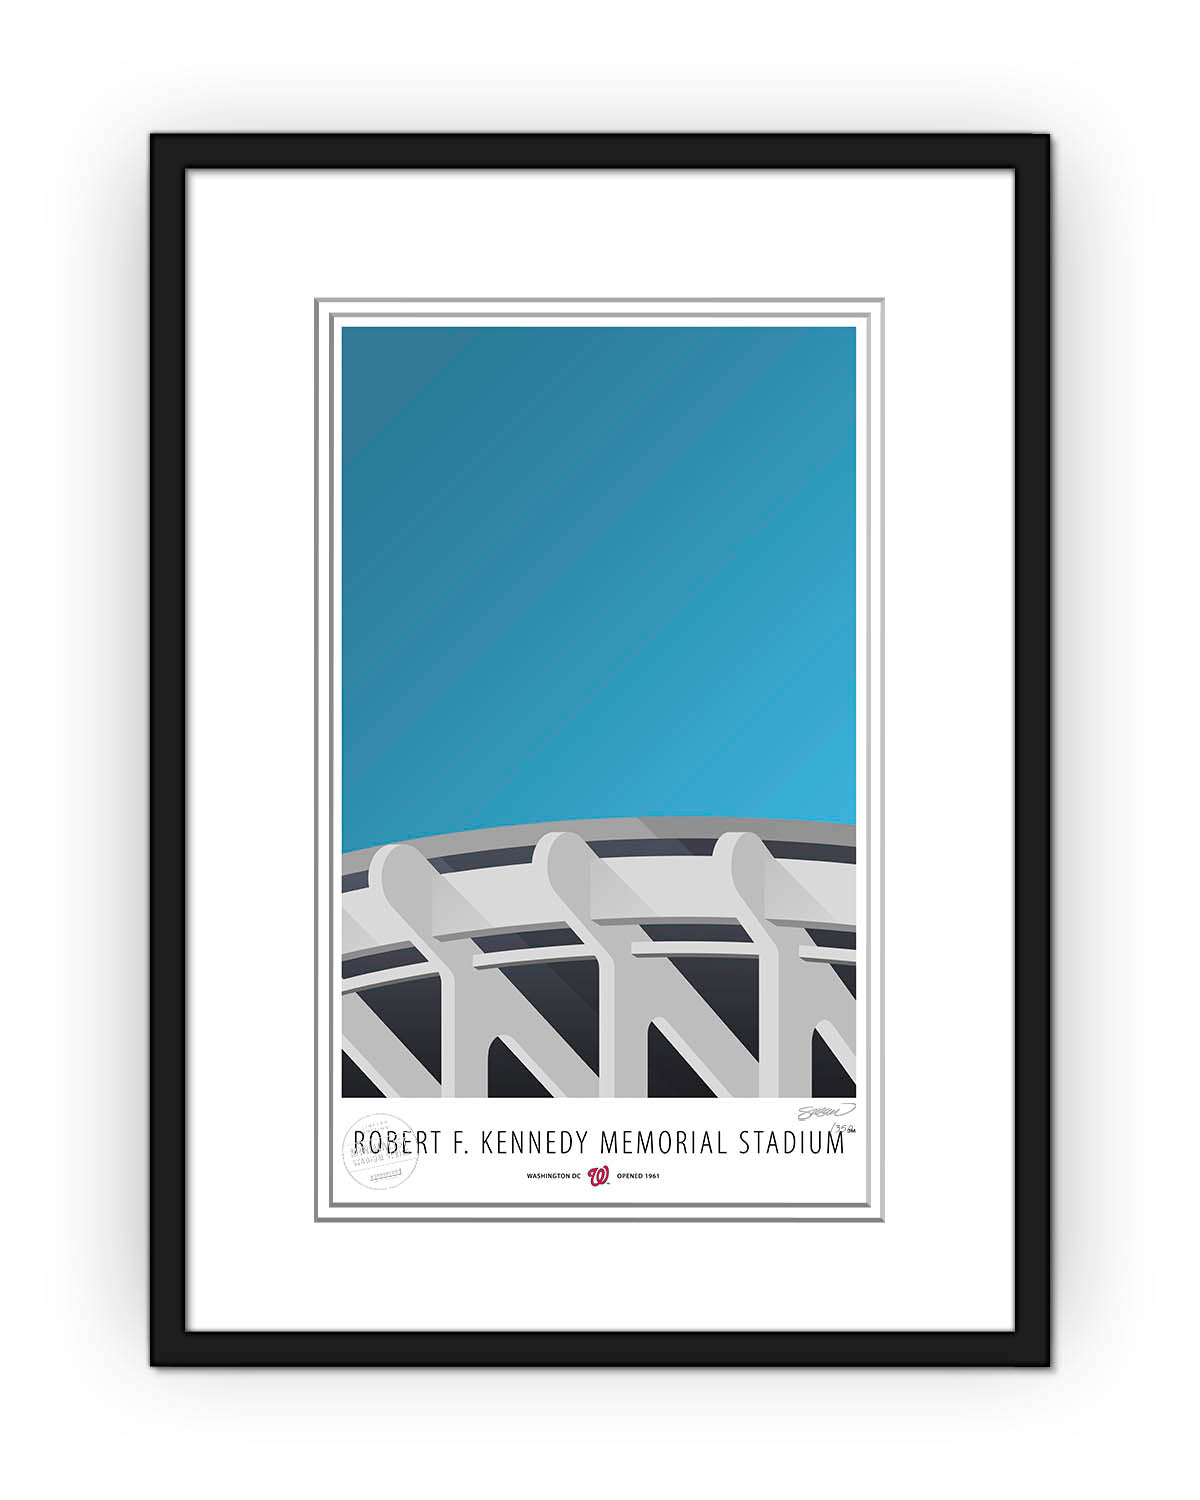 RFK Stadium - history, photos and more of the Washington Senators and  Nationals former ballpark